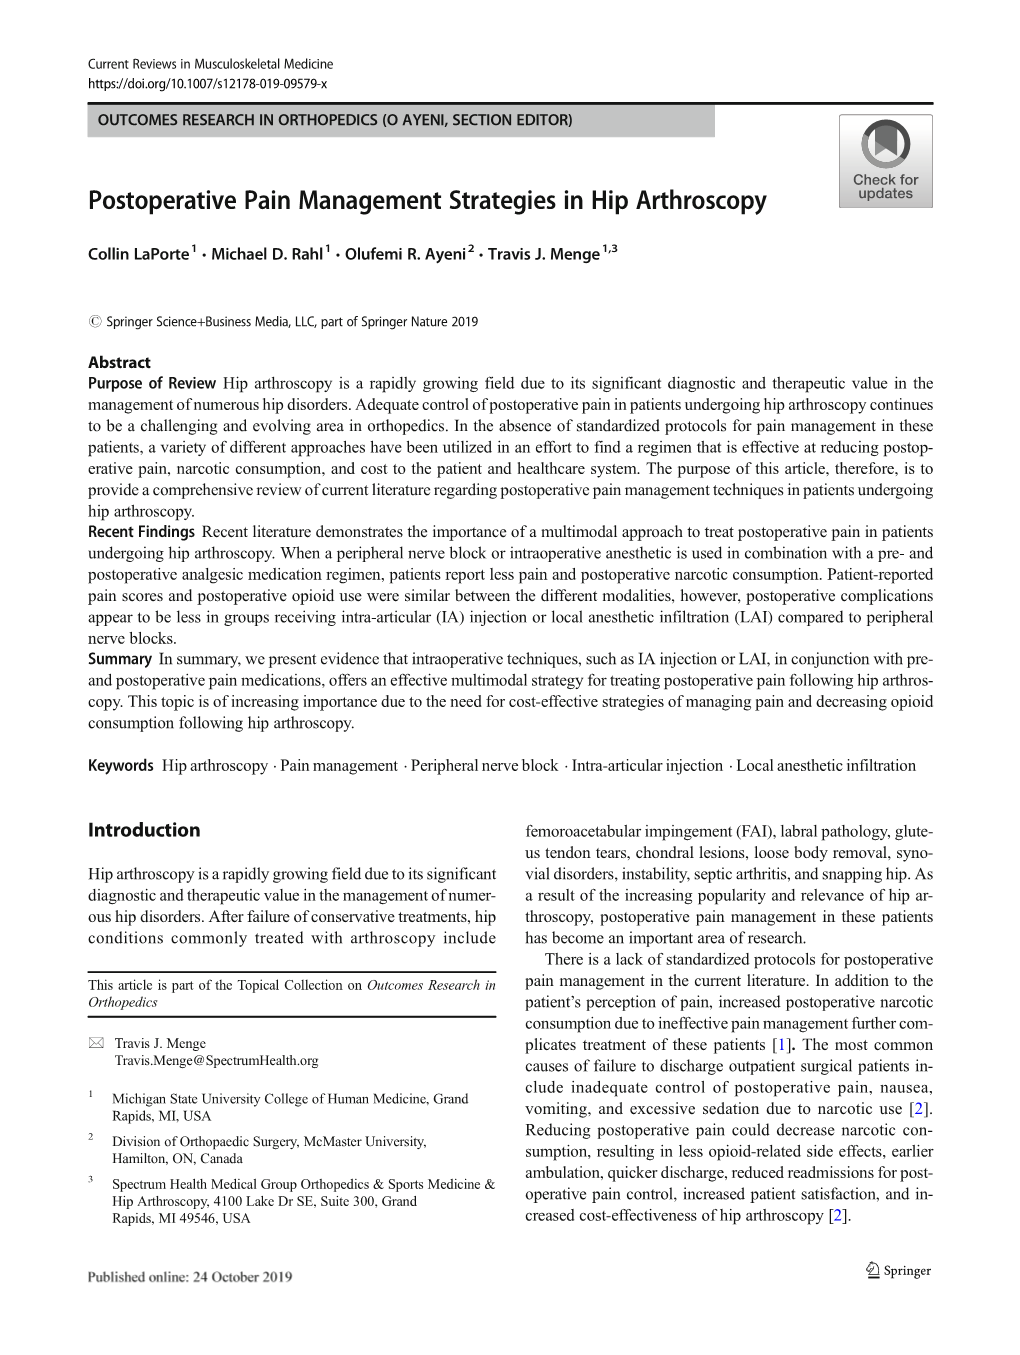 Postoperative Pain Management Strategies in Hip Arthroscopy